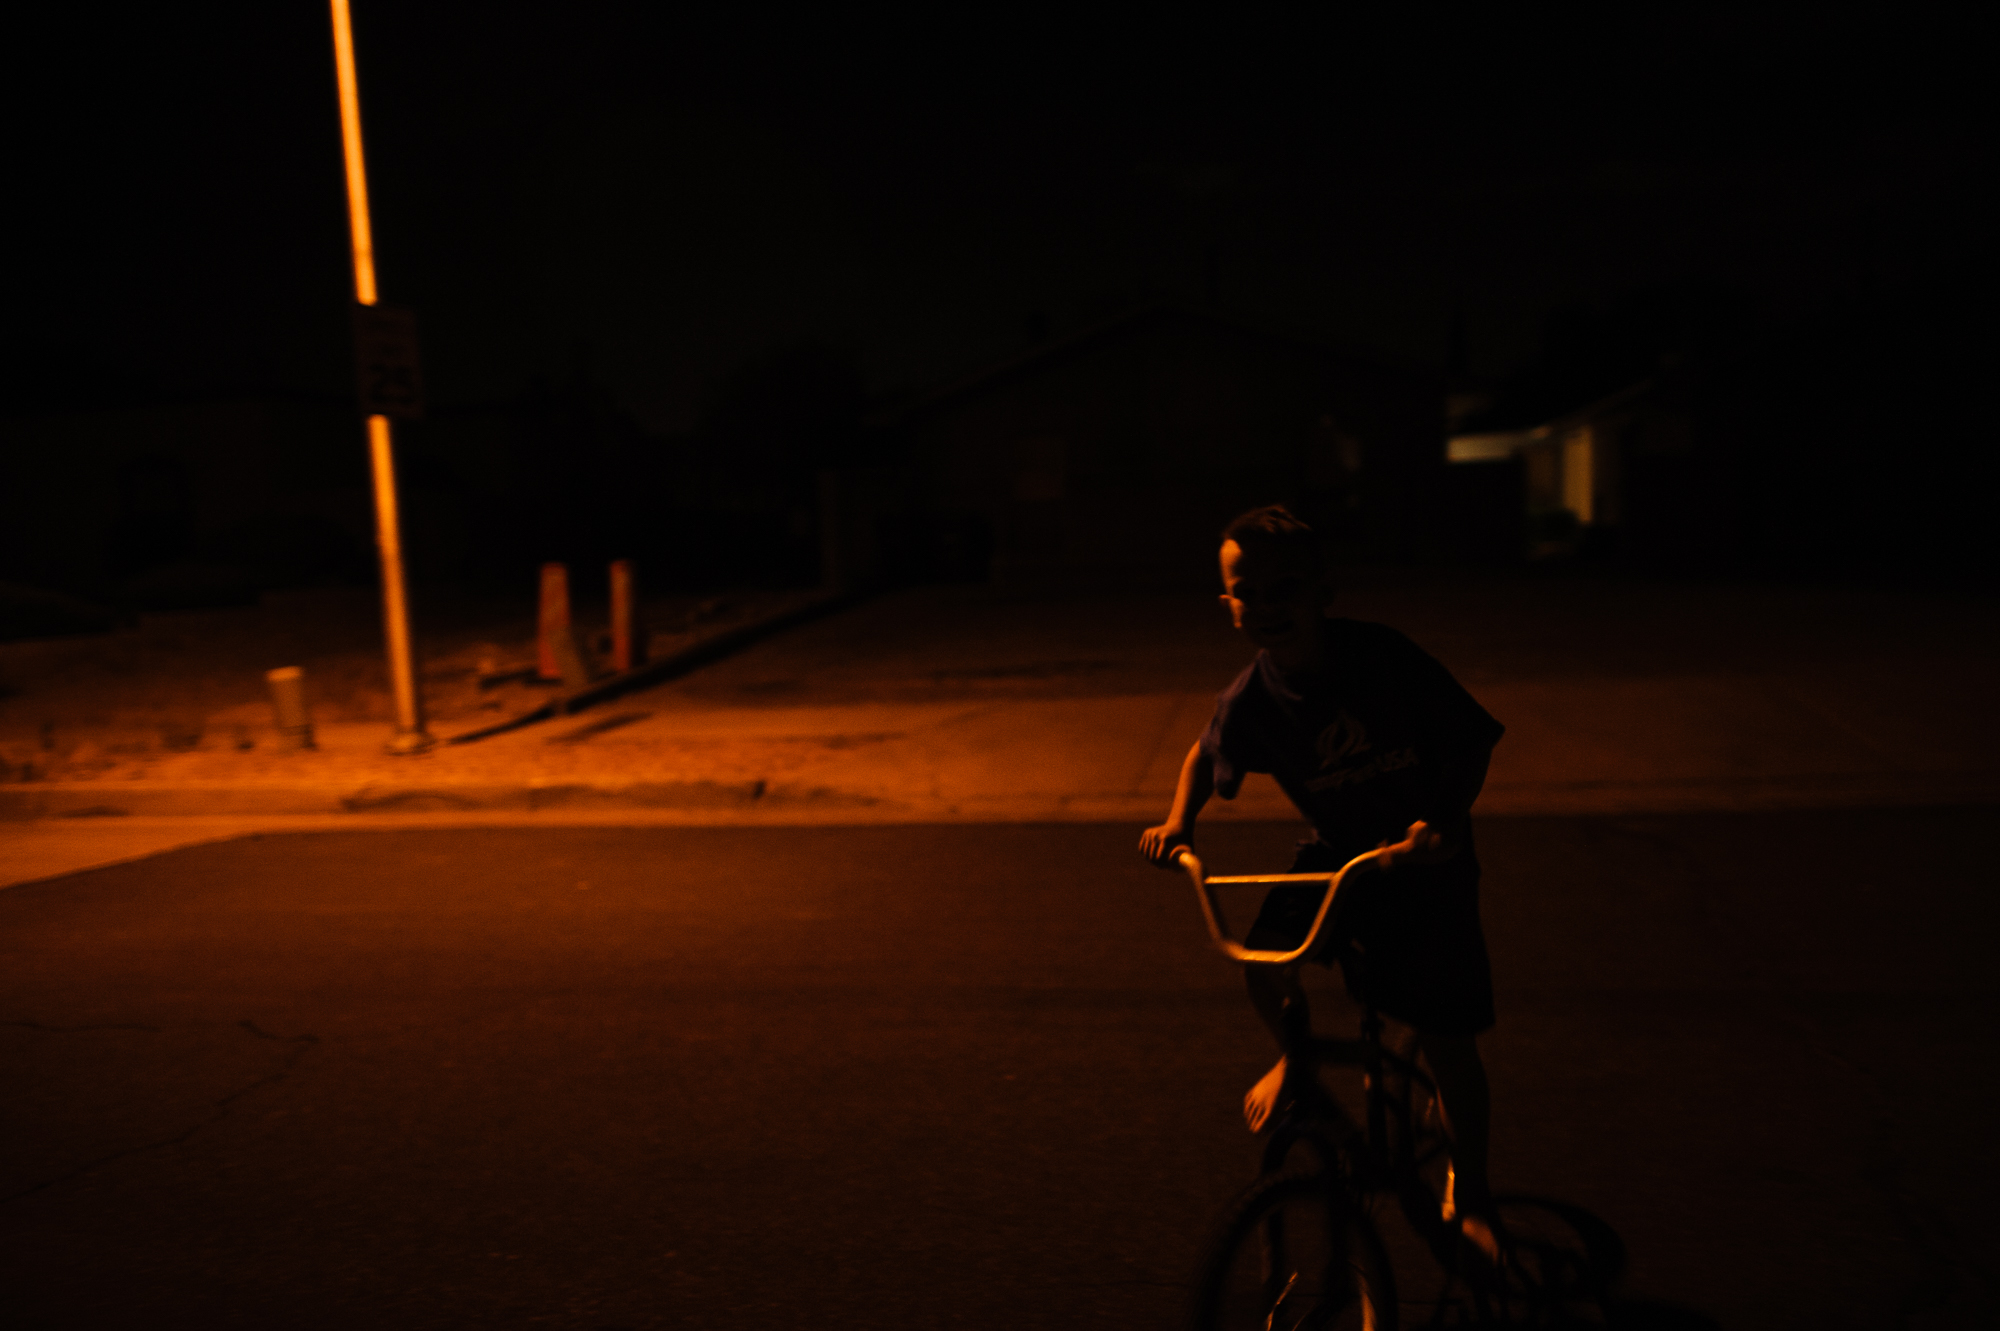  Michael, age 7, rides a bike at night, 2012.&nbsp; 